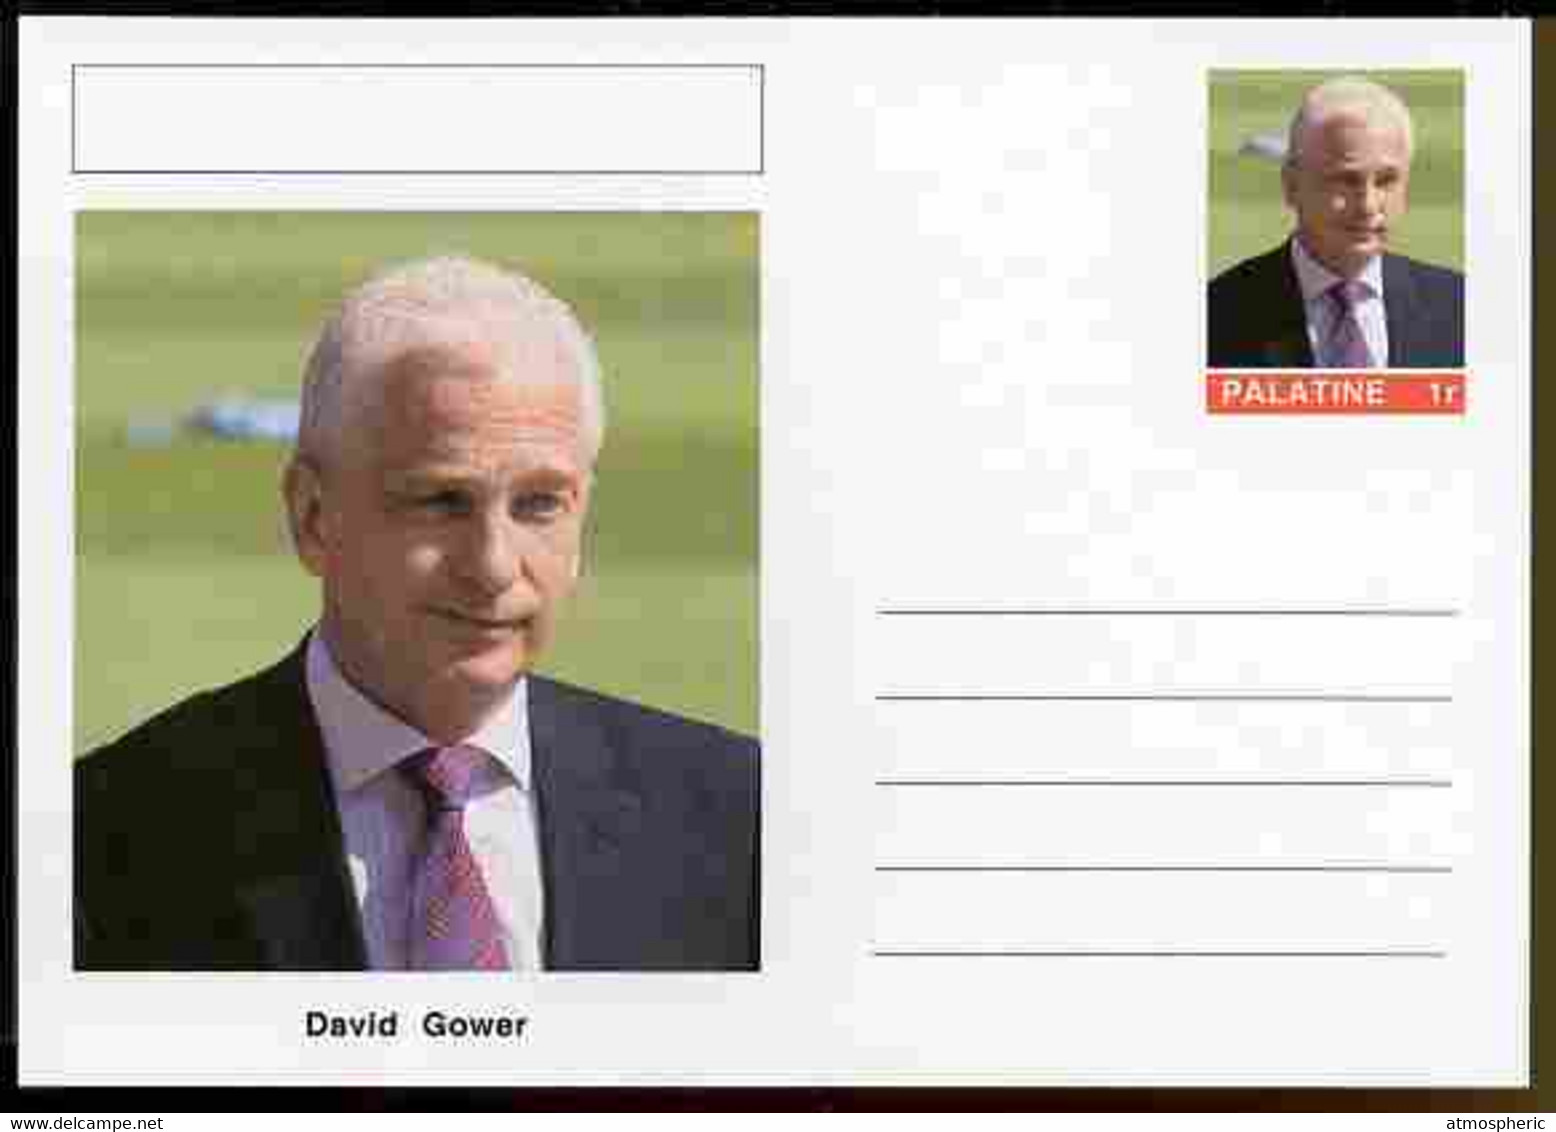 Palatine (Fantasy) Personalities - David Gower (cricket) Postal Stationery Card Unused And Fine - Cricket